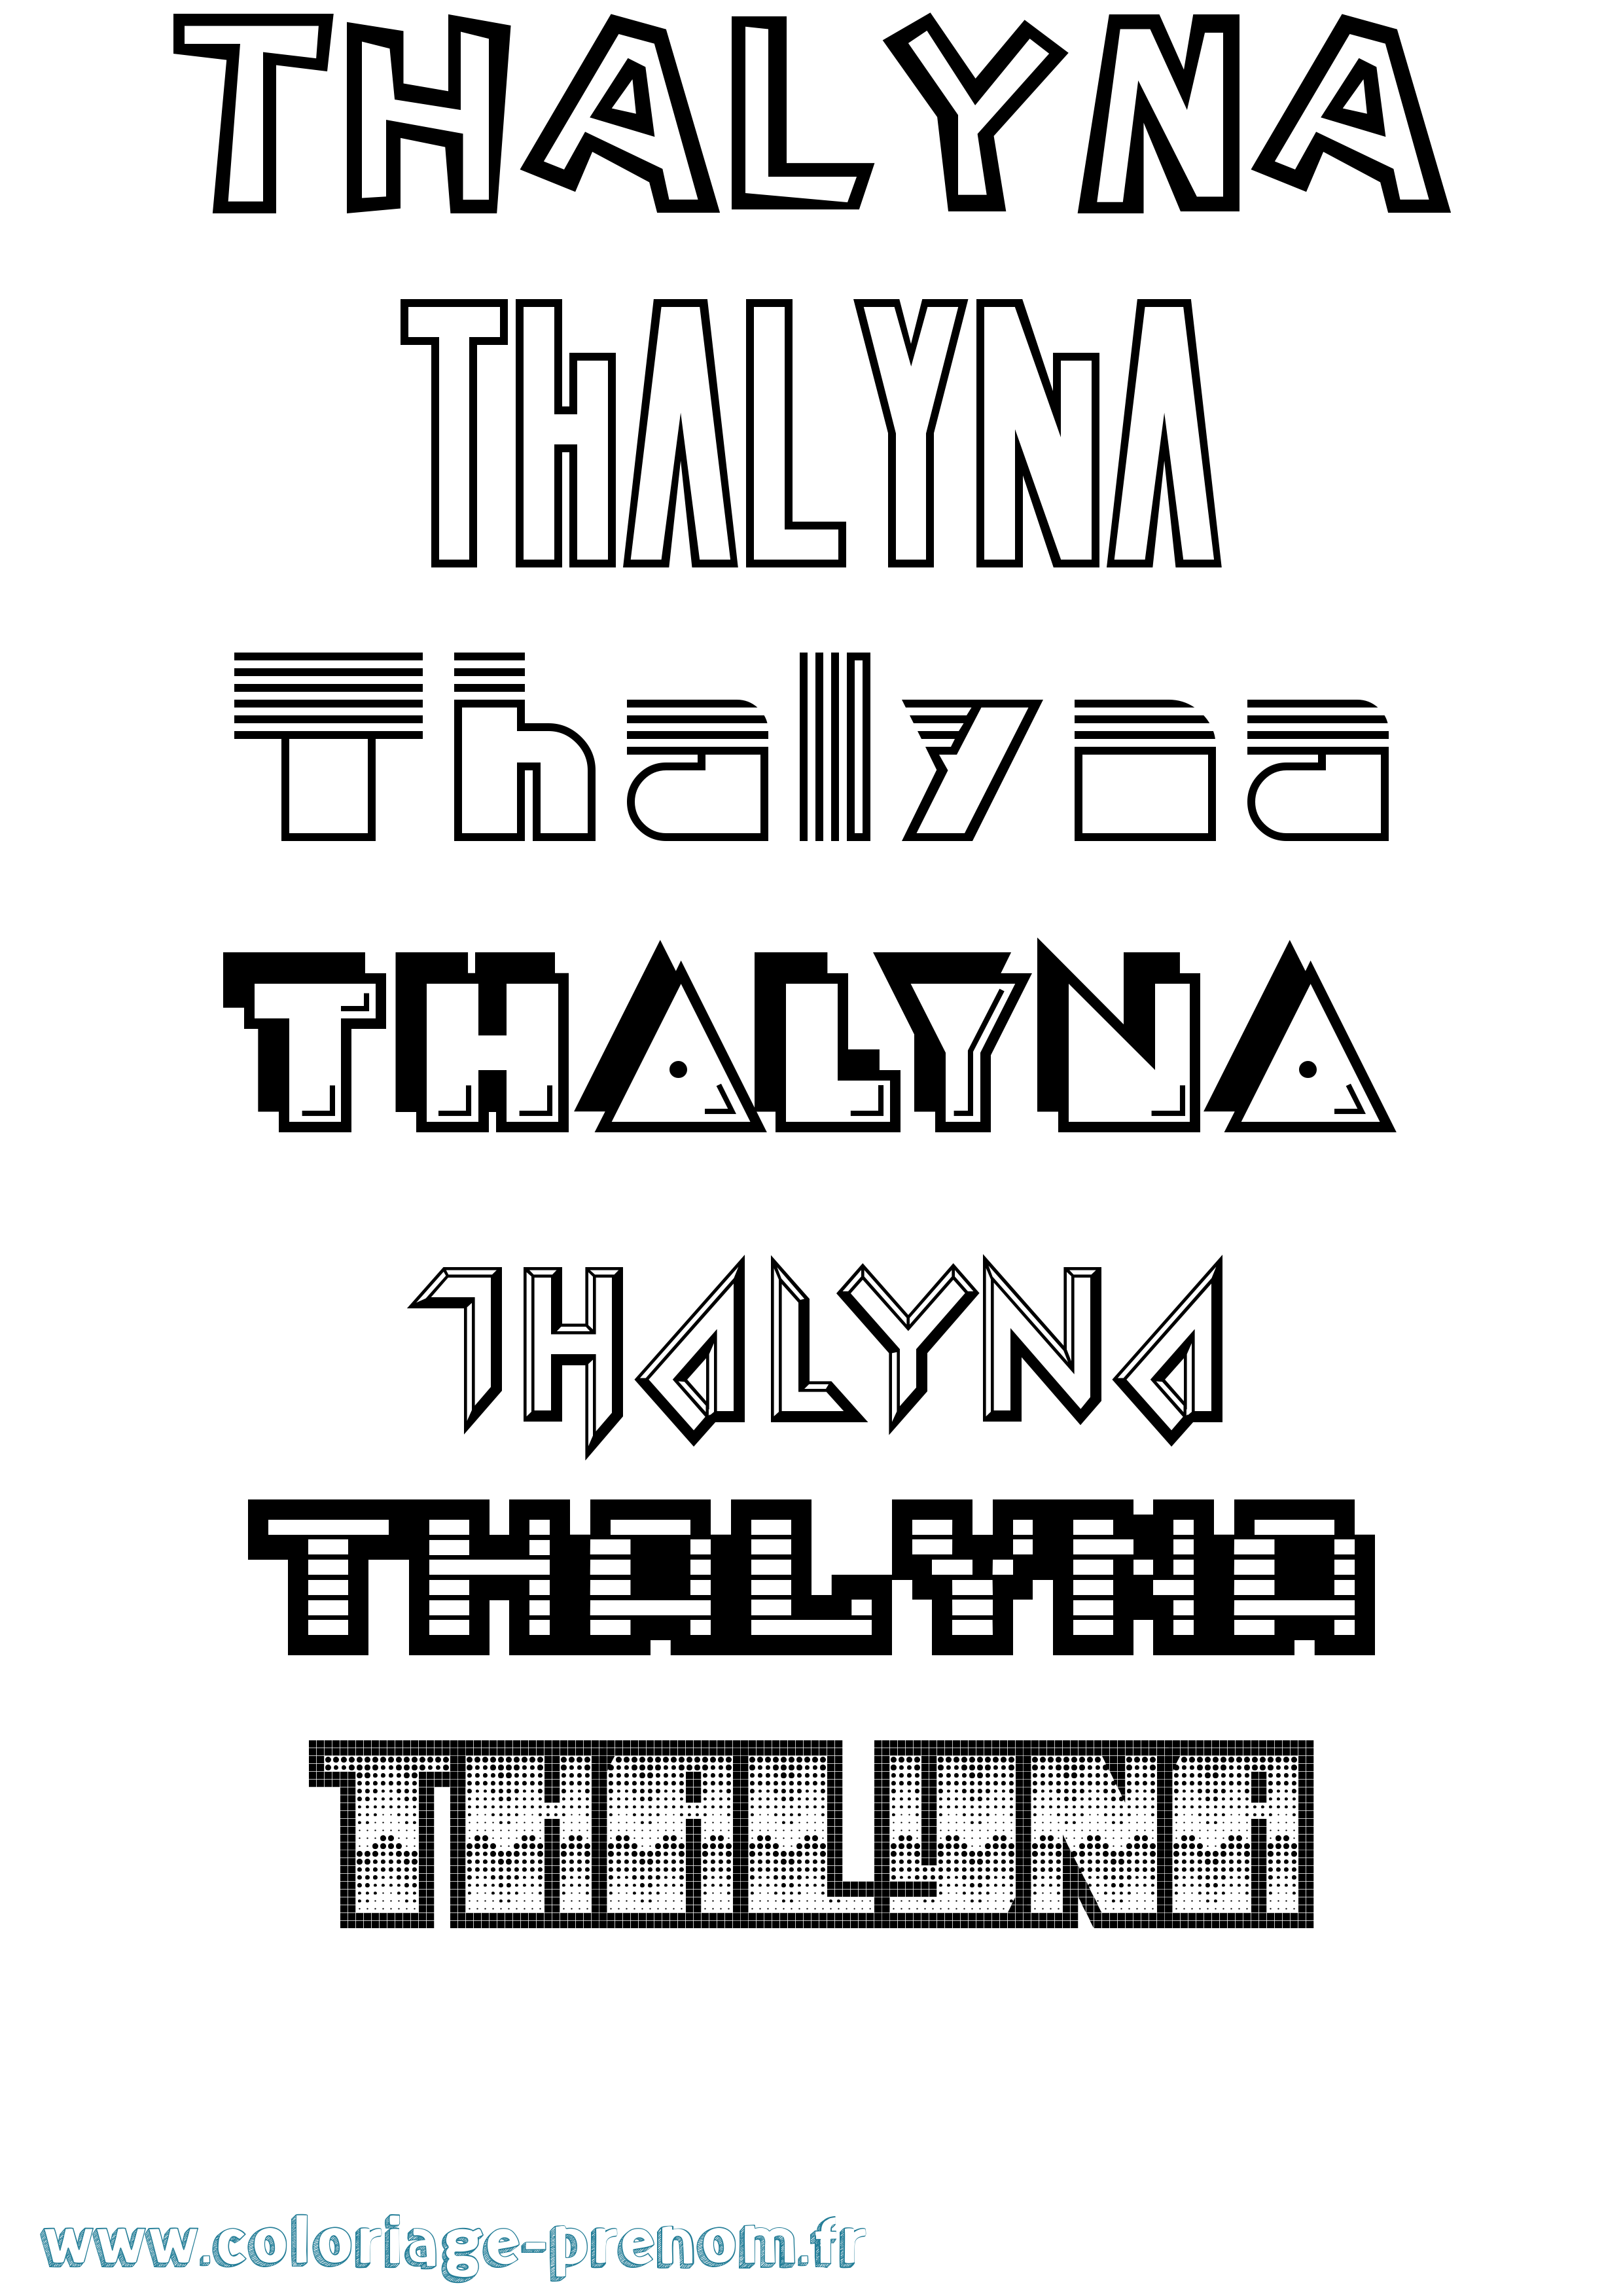 Coloriage prénom Thalyna Jeux Vidéos